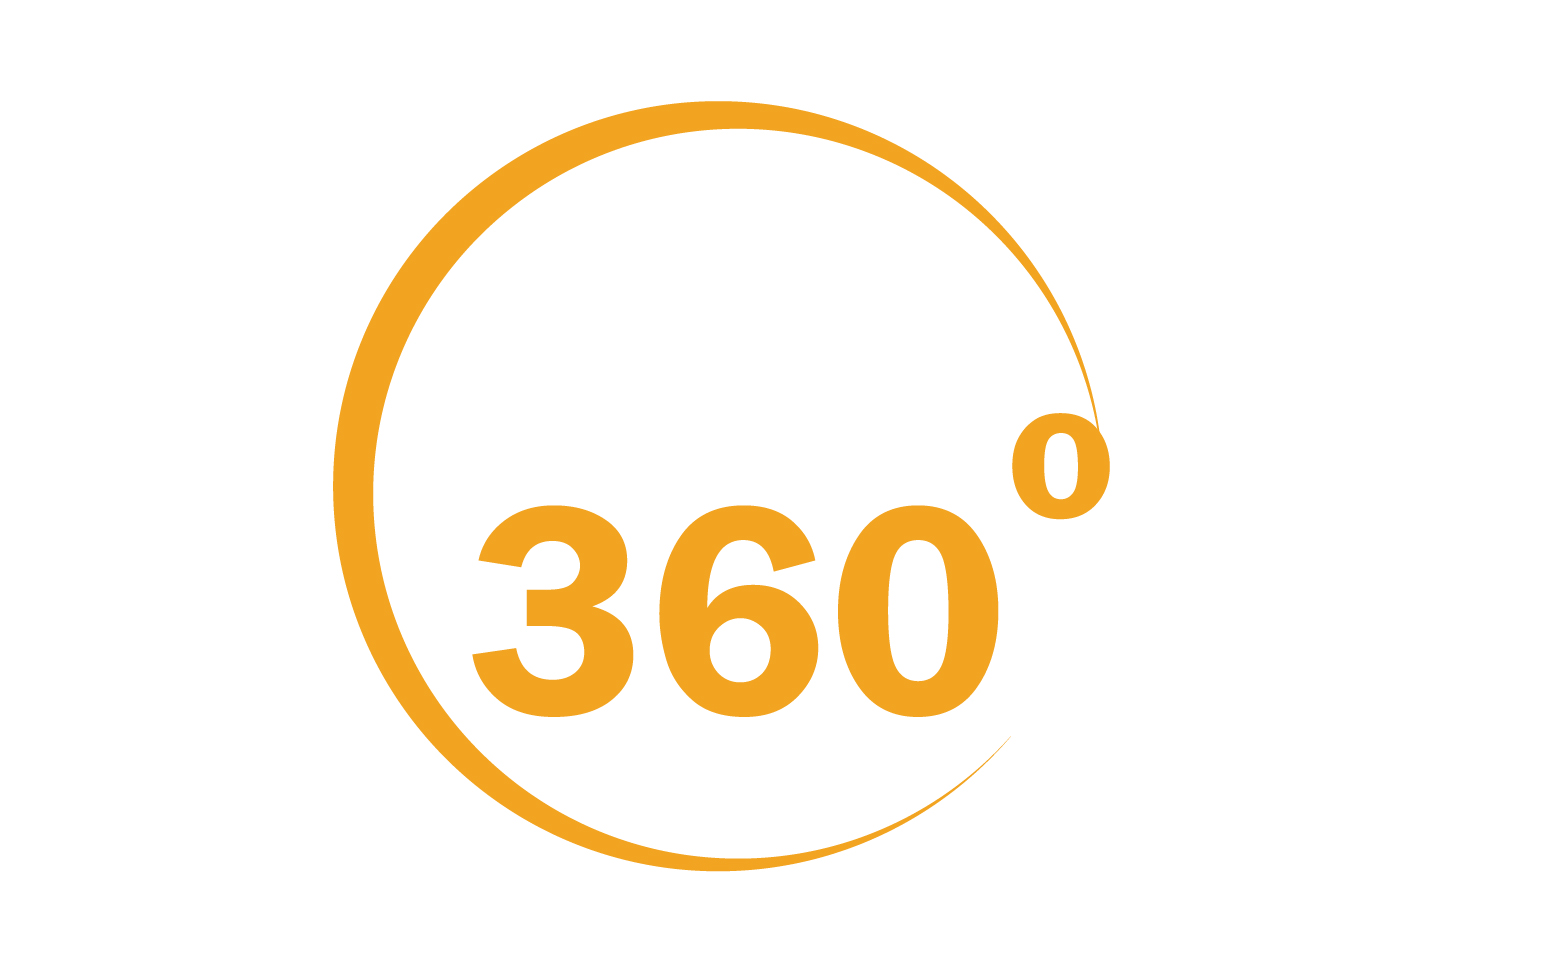 360 degree angle rotation icon symbol logo version v1